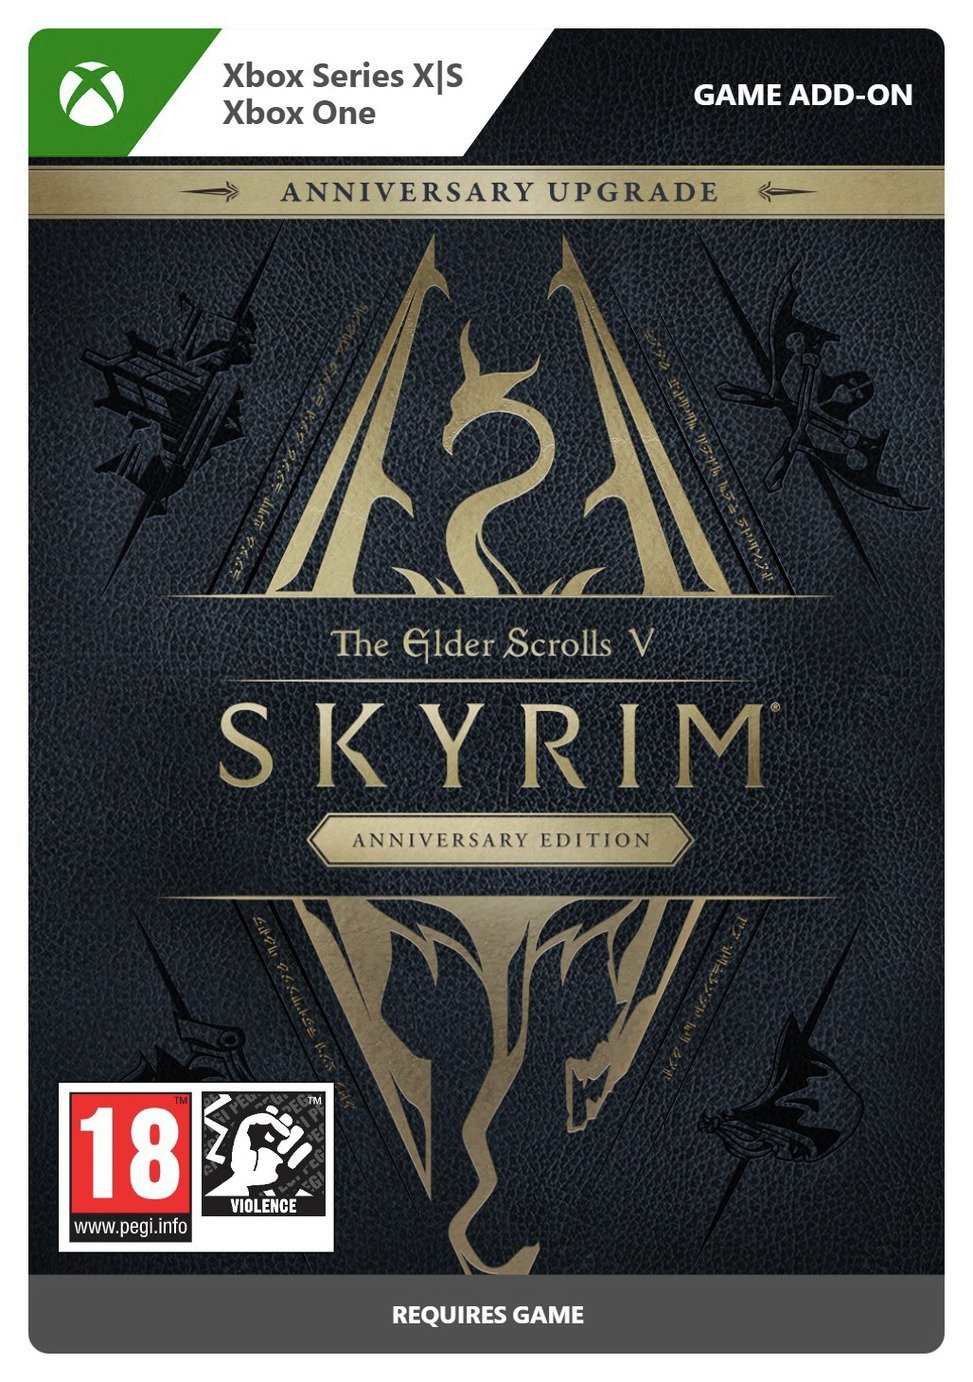 The Elder Scrolls V: Skyrim Anniversary Upgrade Xbox Add On